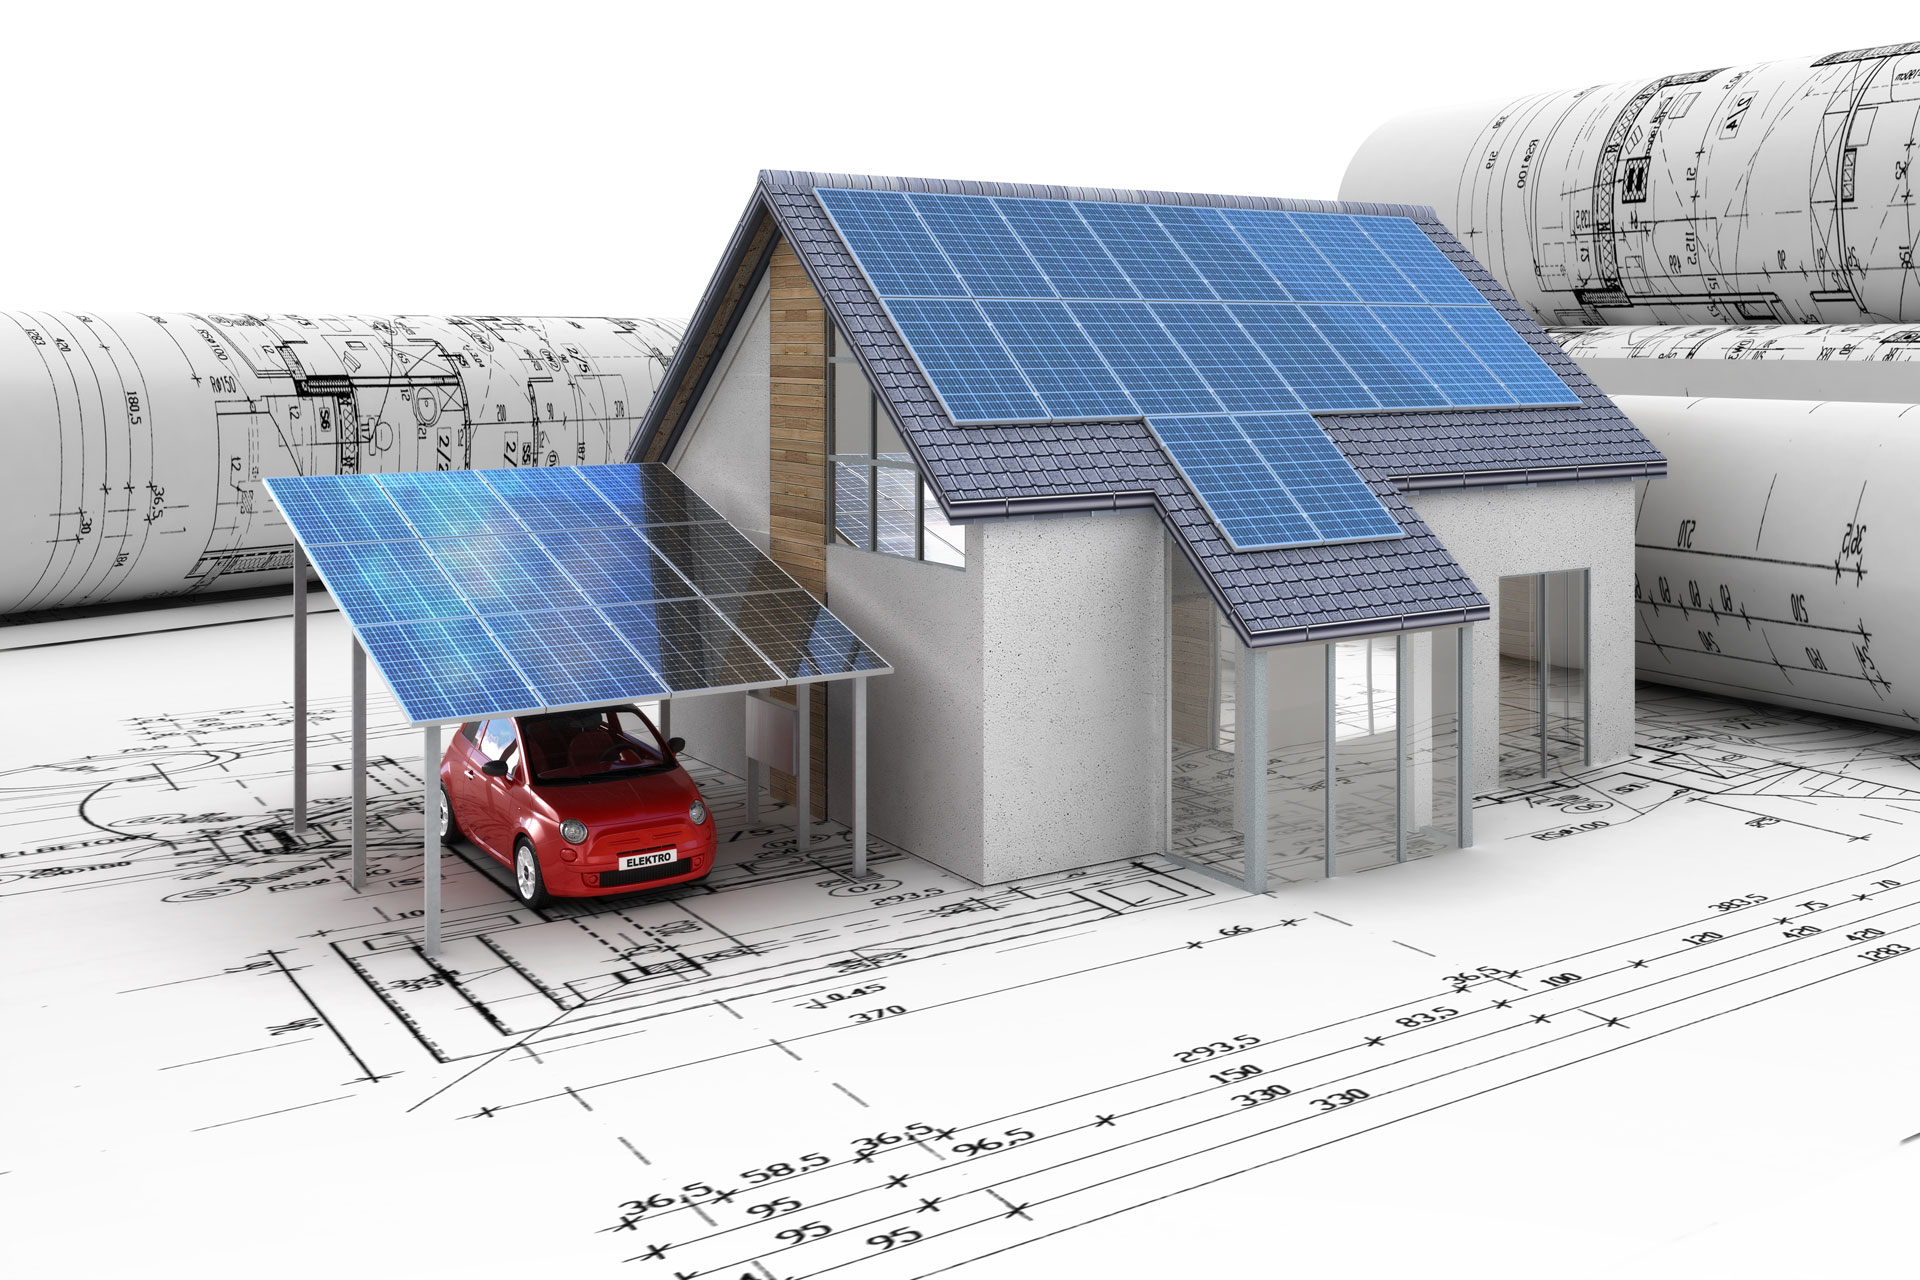 The Solar Carport Solaron